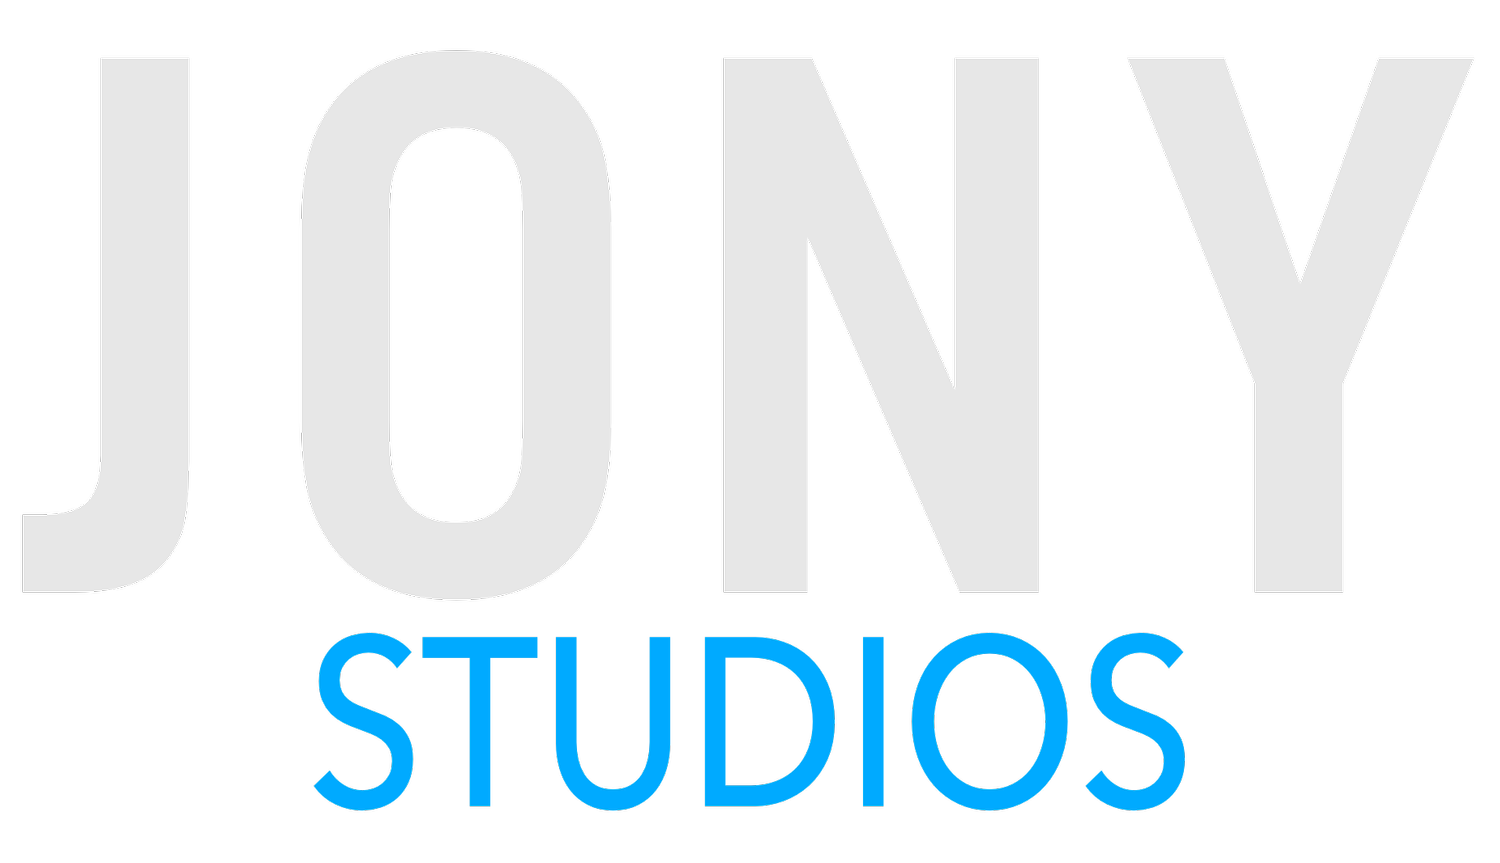 JONY STUDIOS